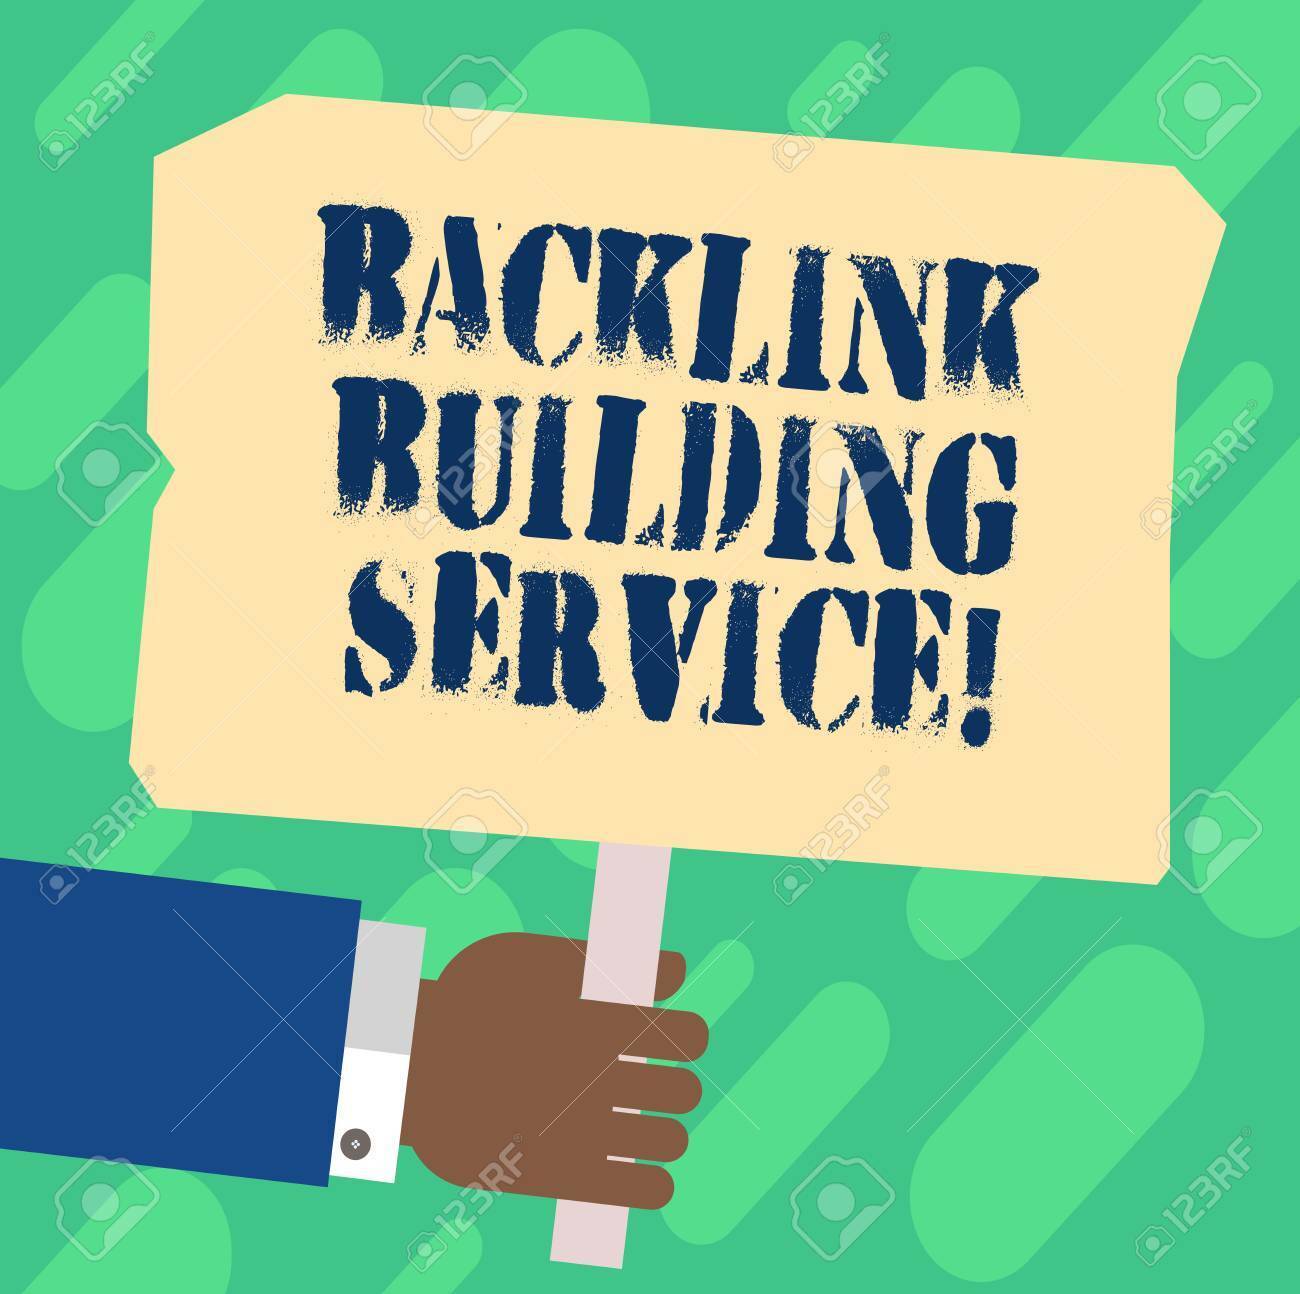 High Domain Authority Backlink SEO Service